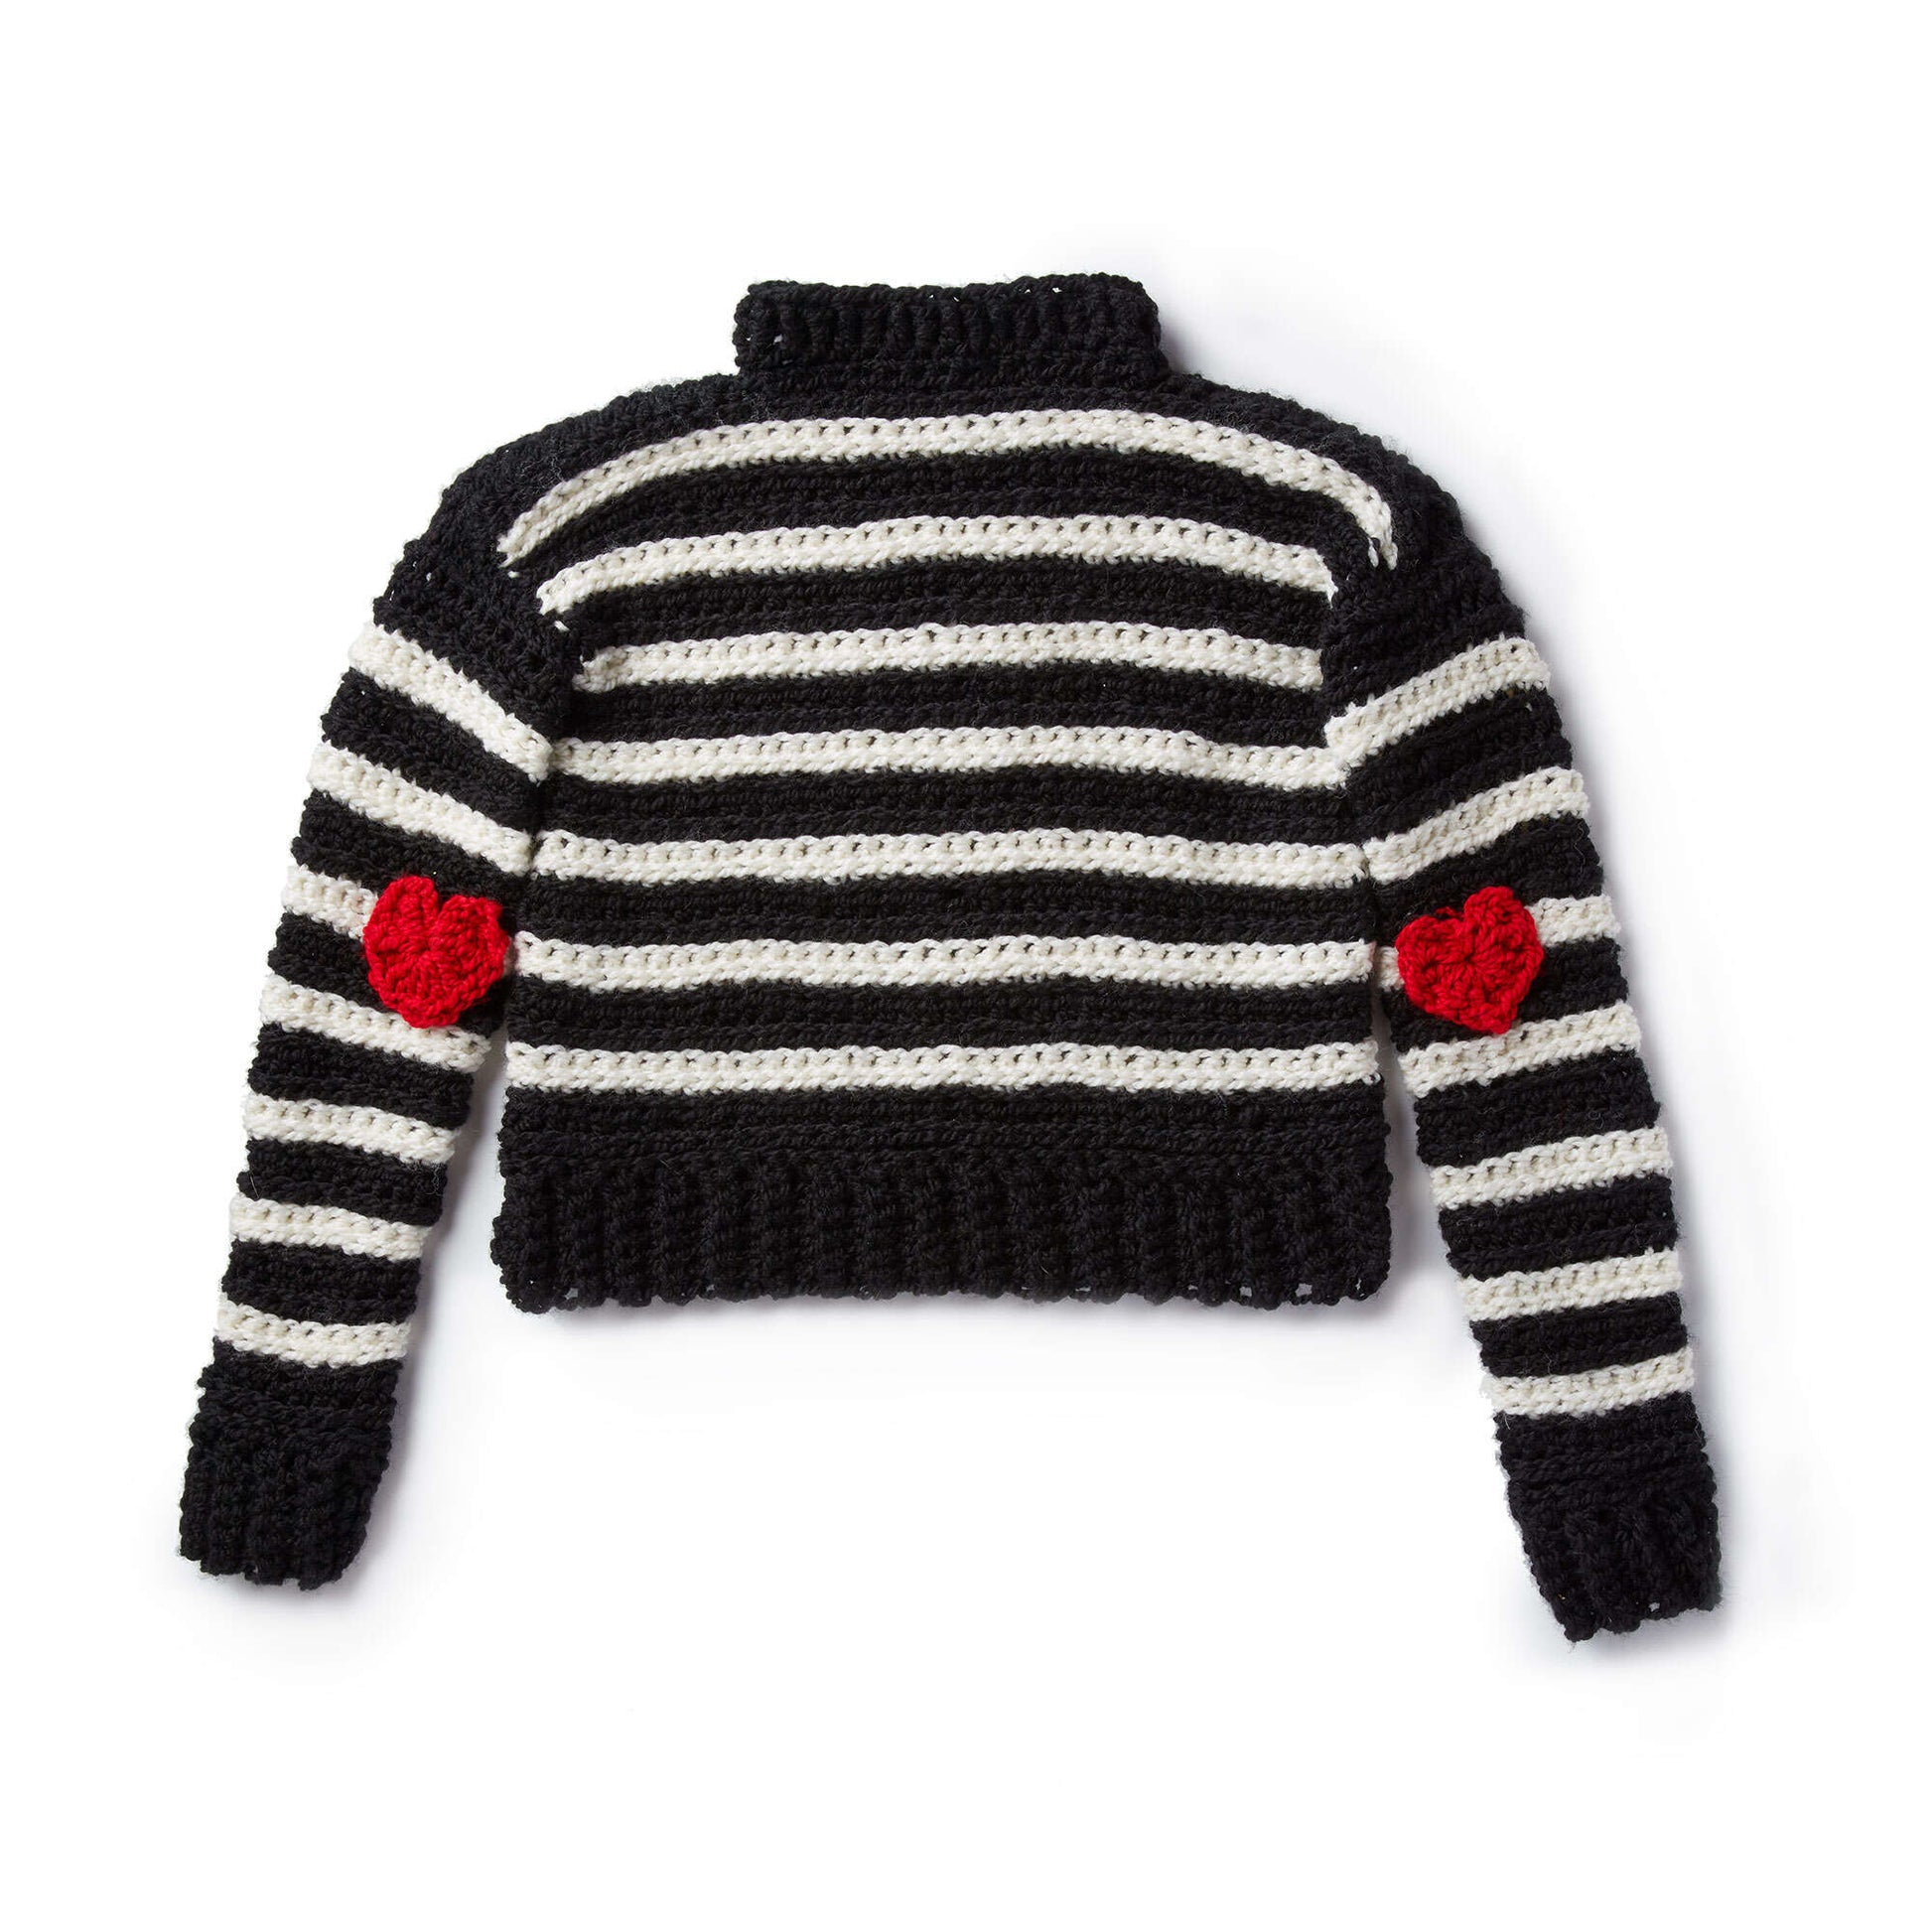 Free Patons I Heart You Crochet Sweater Pattern